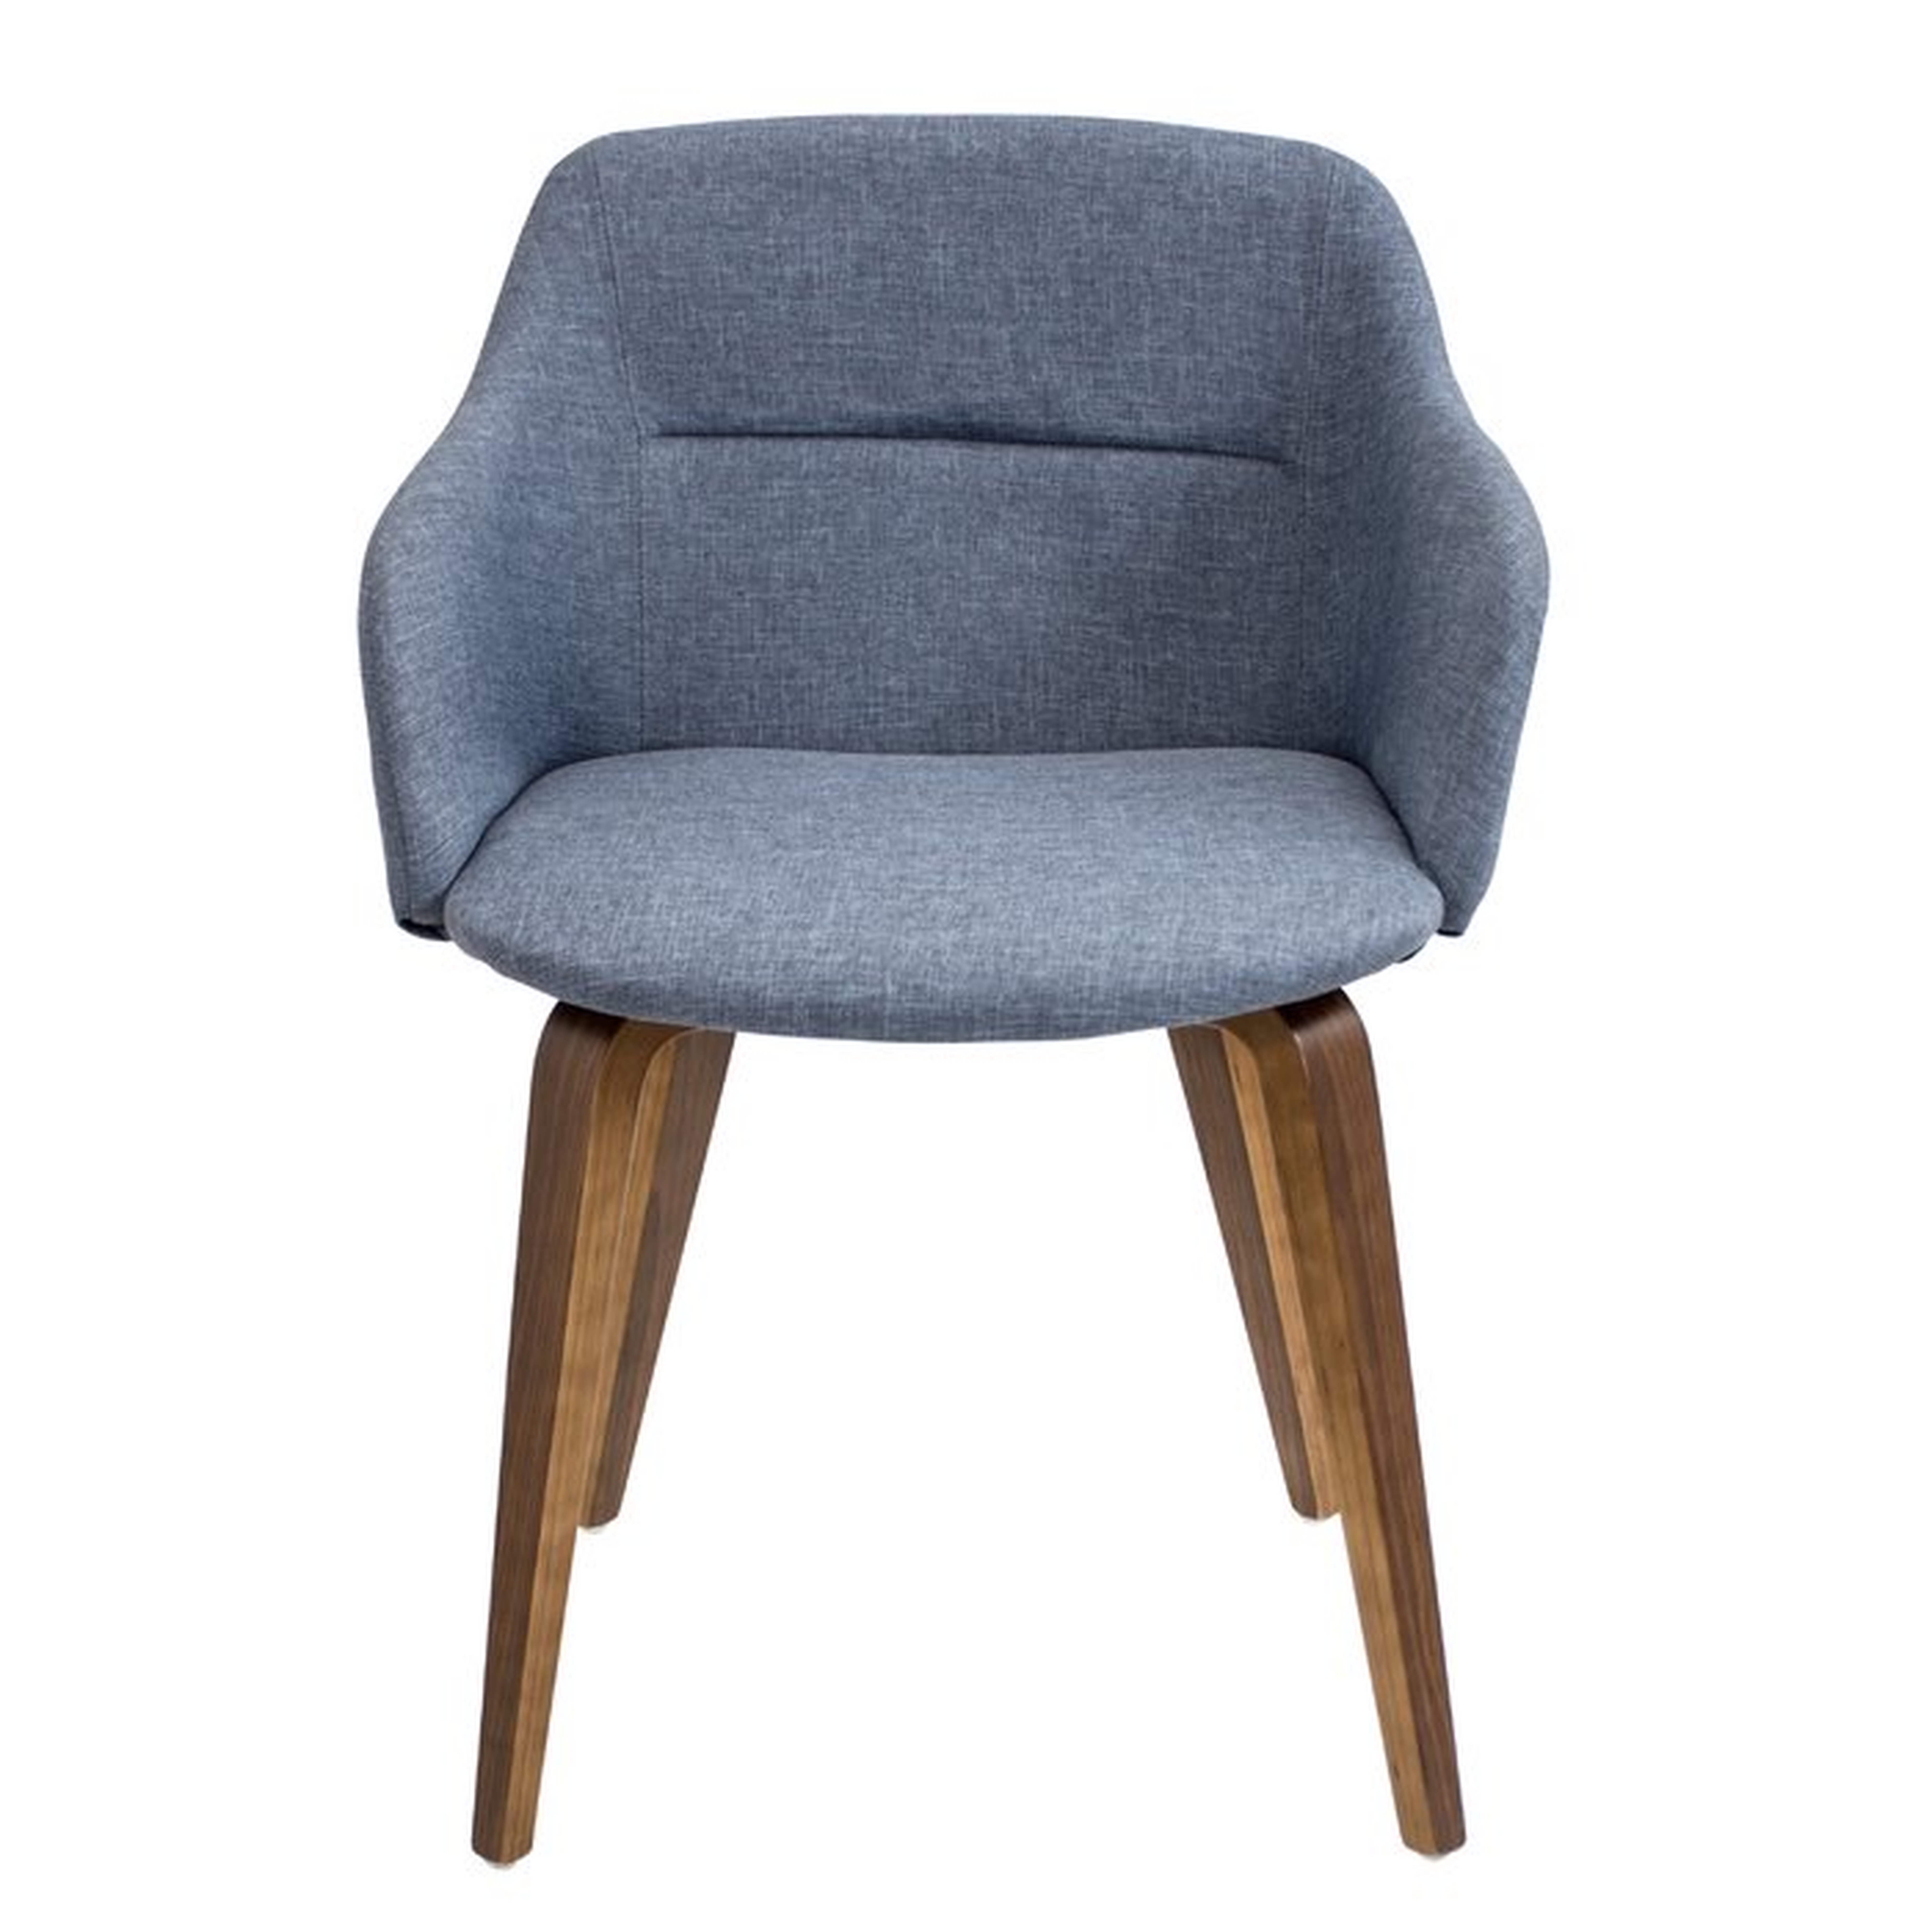 Corozon Upholstered Dining Chair - Wayfair